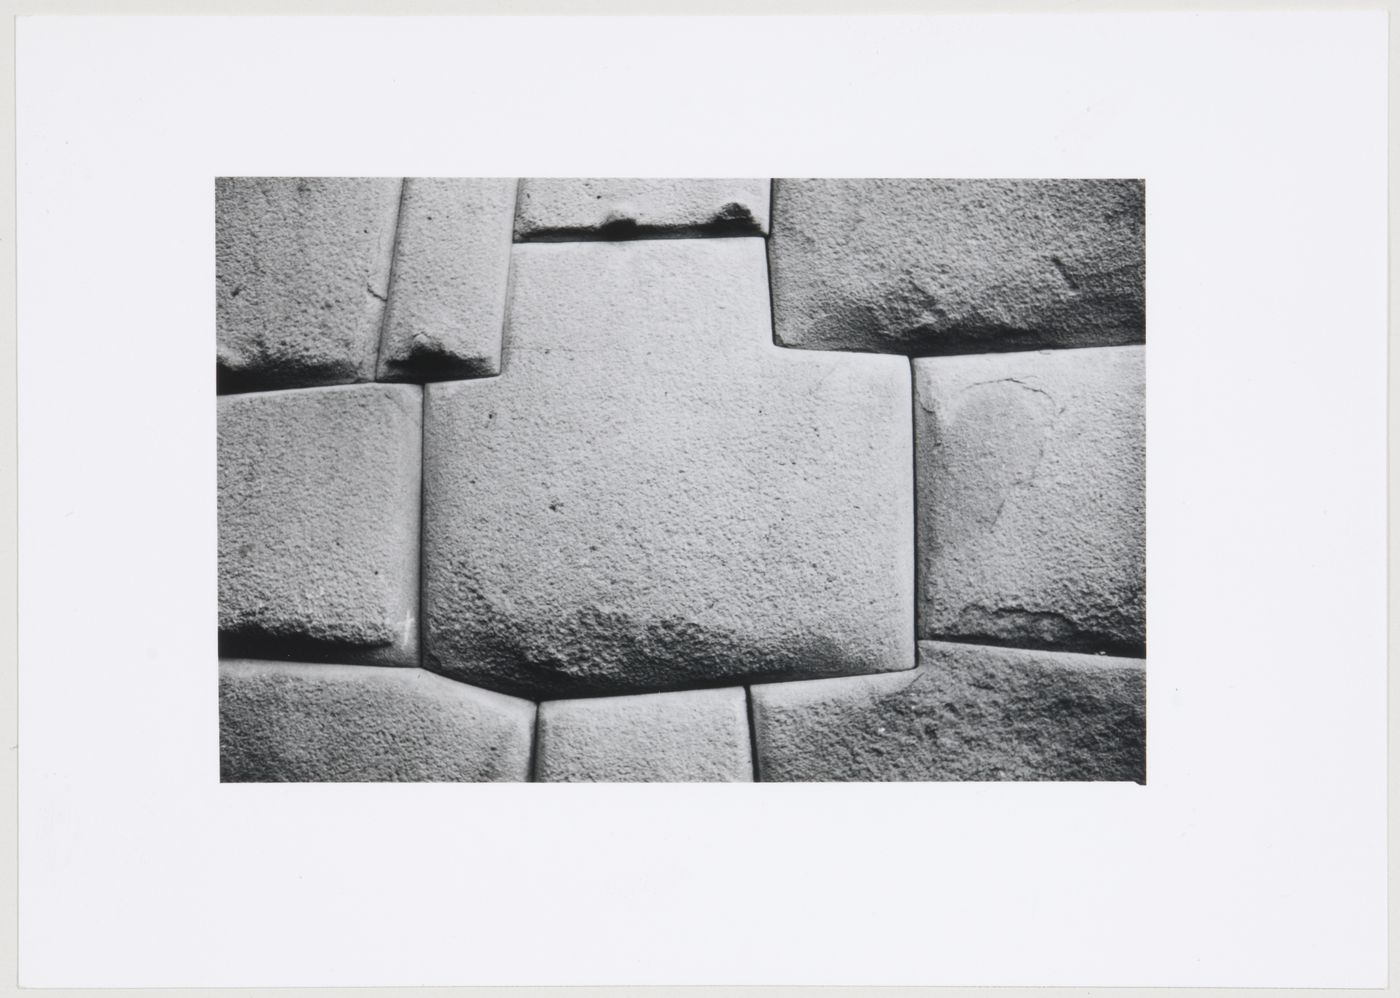 Inca stonework, Peru